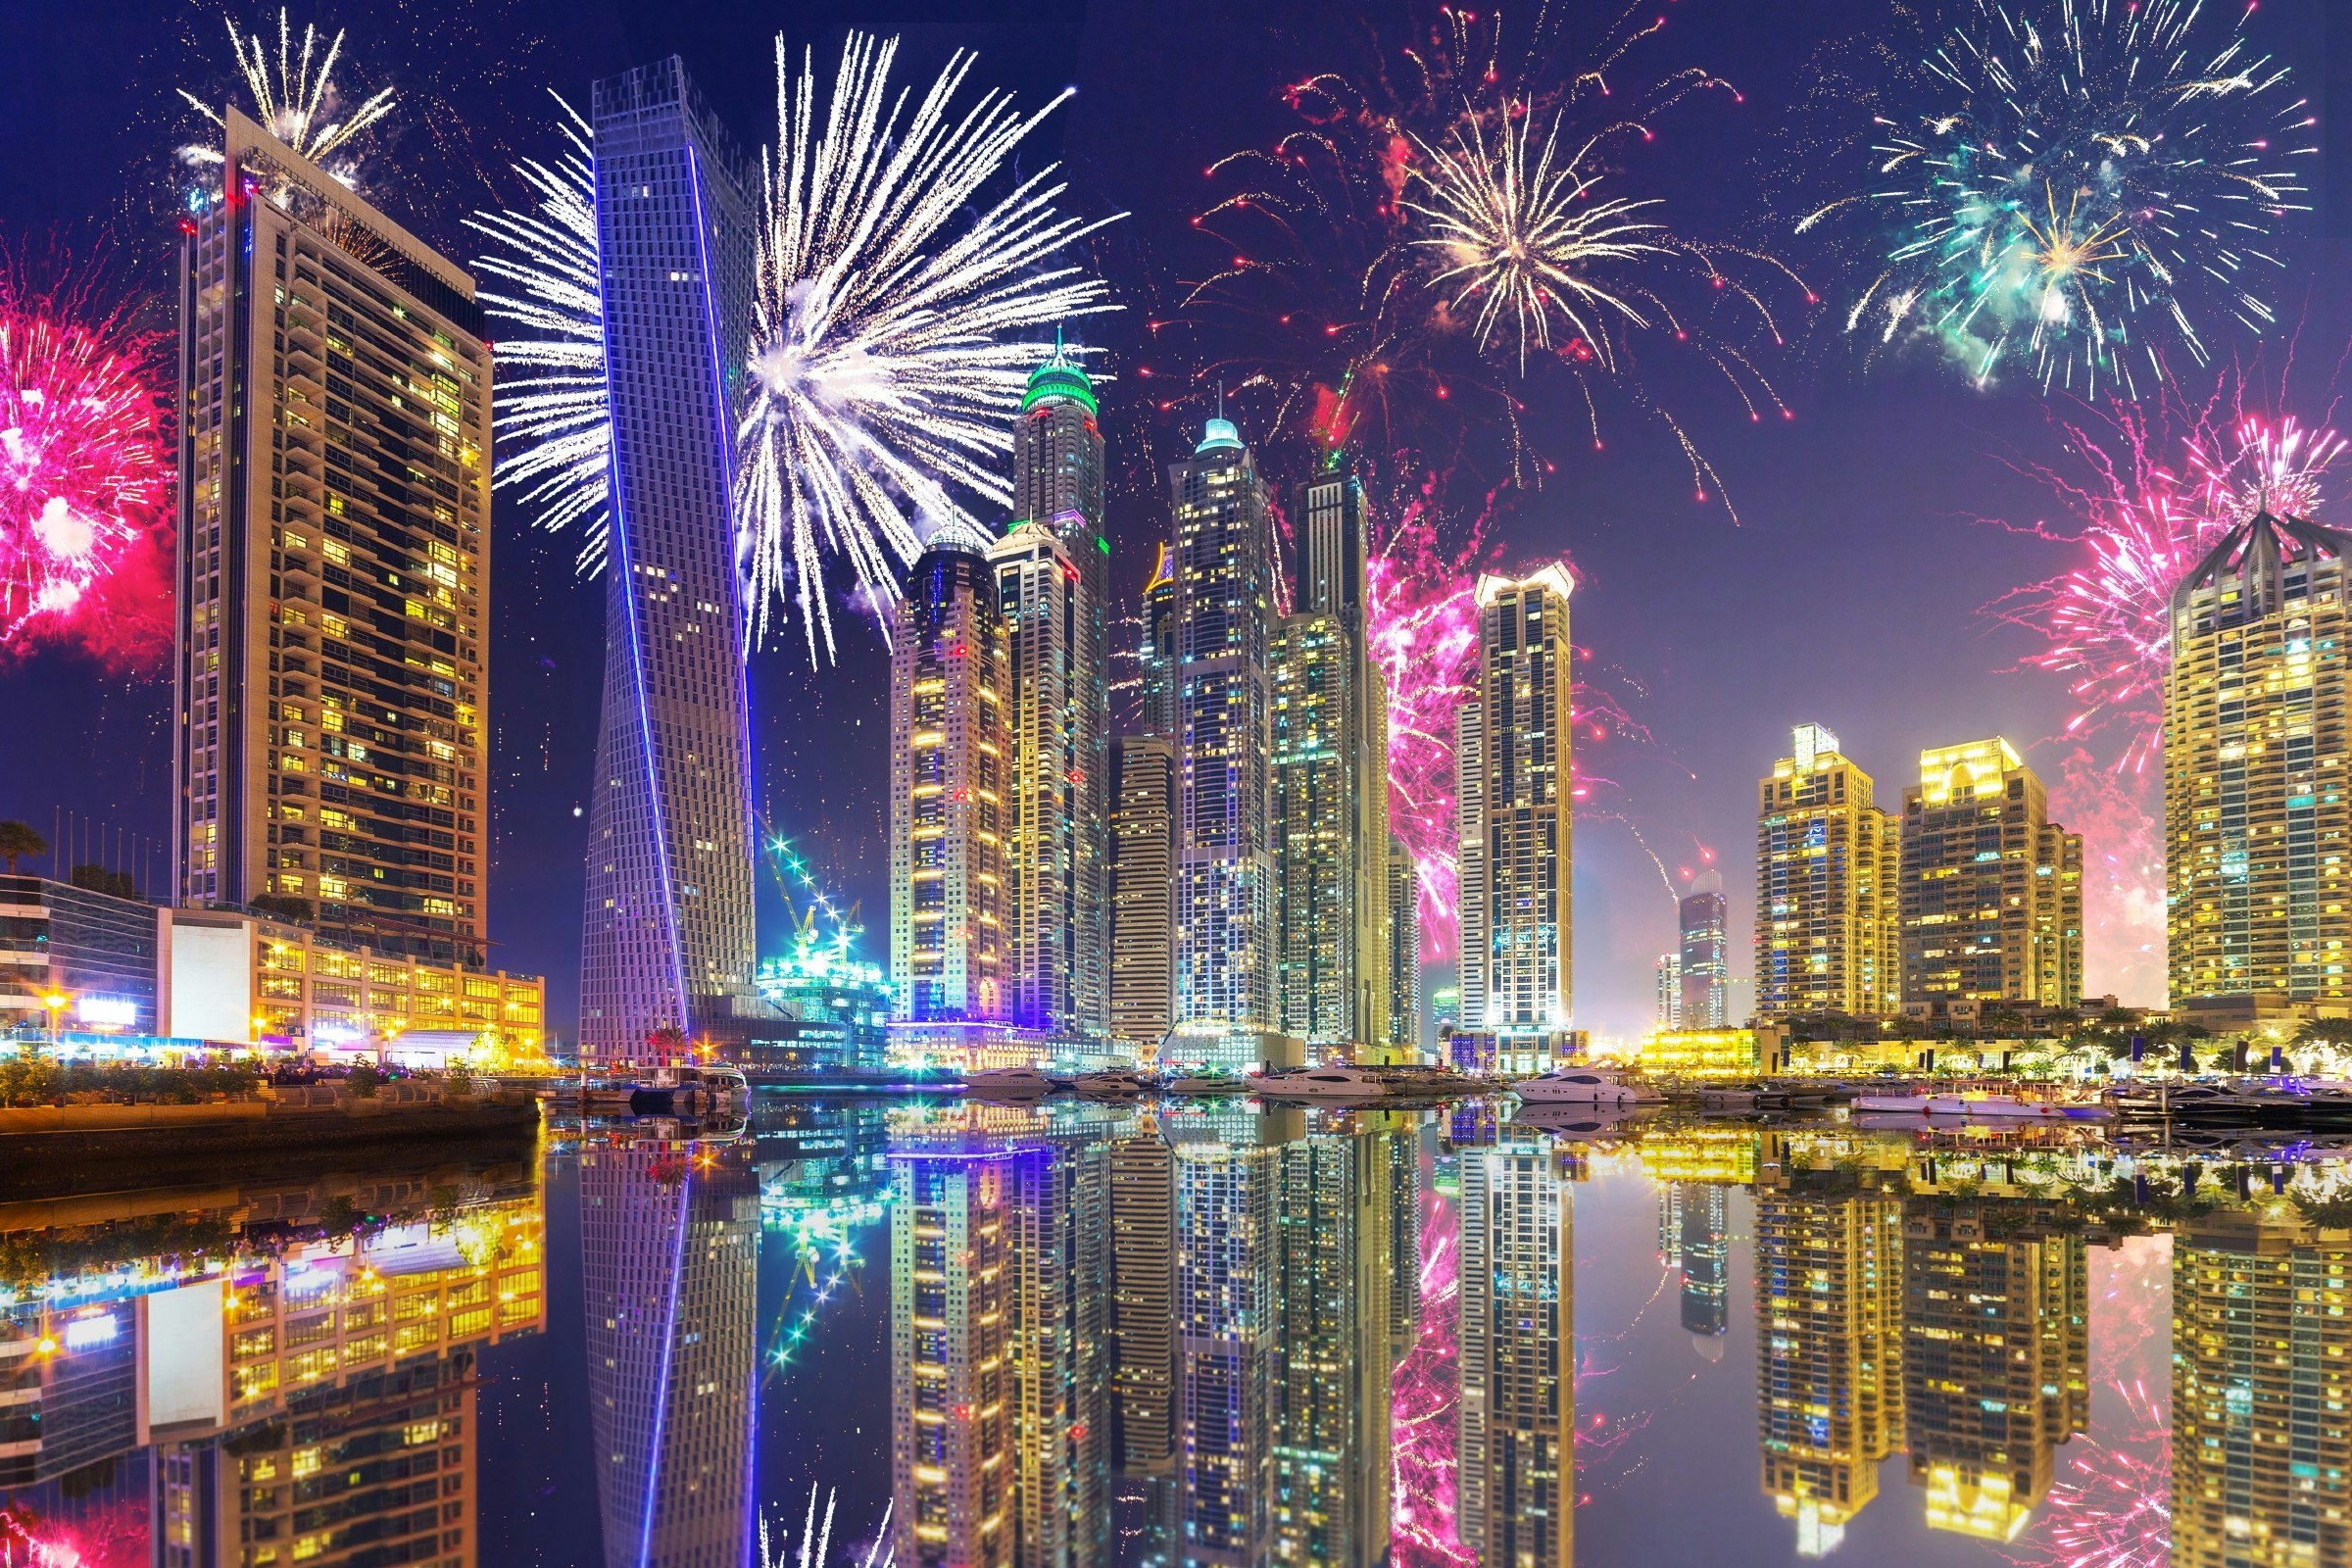 Fireworks display in the night sky over Dubai city.jpg